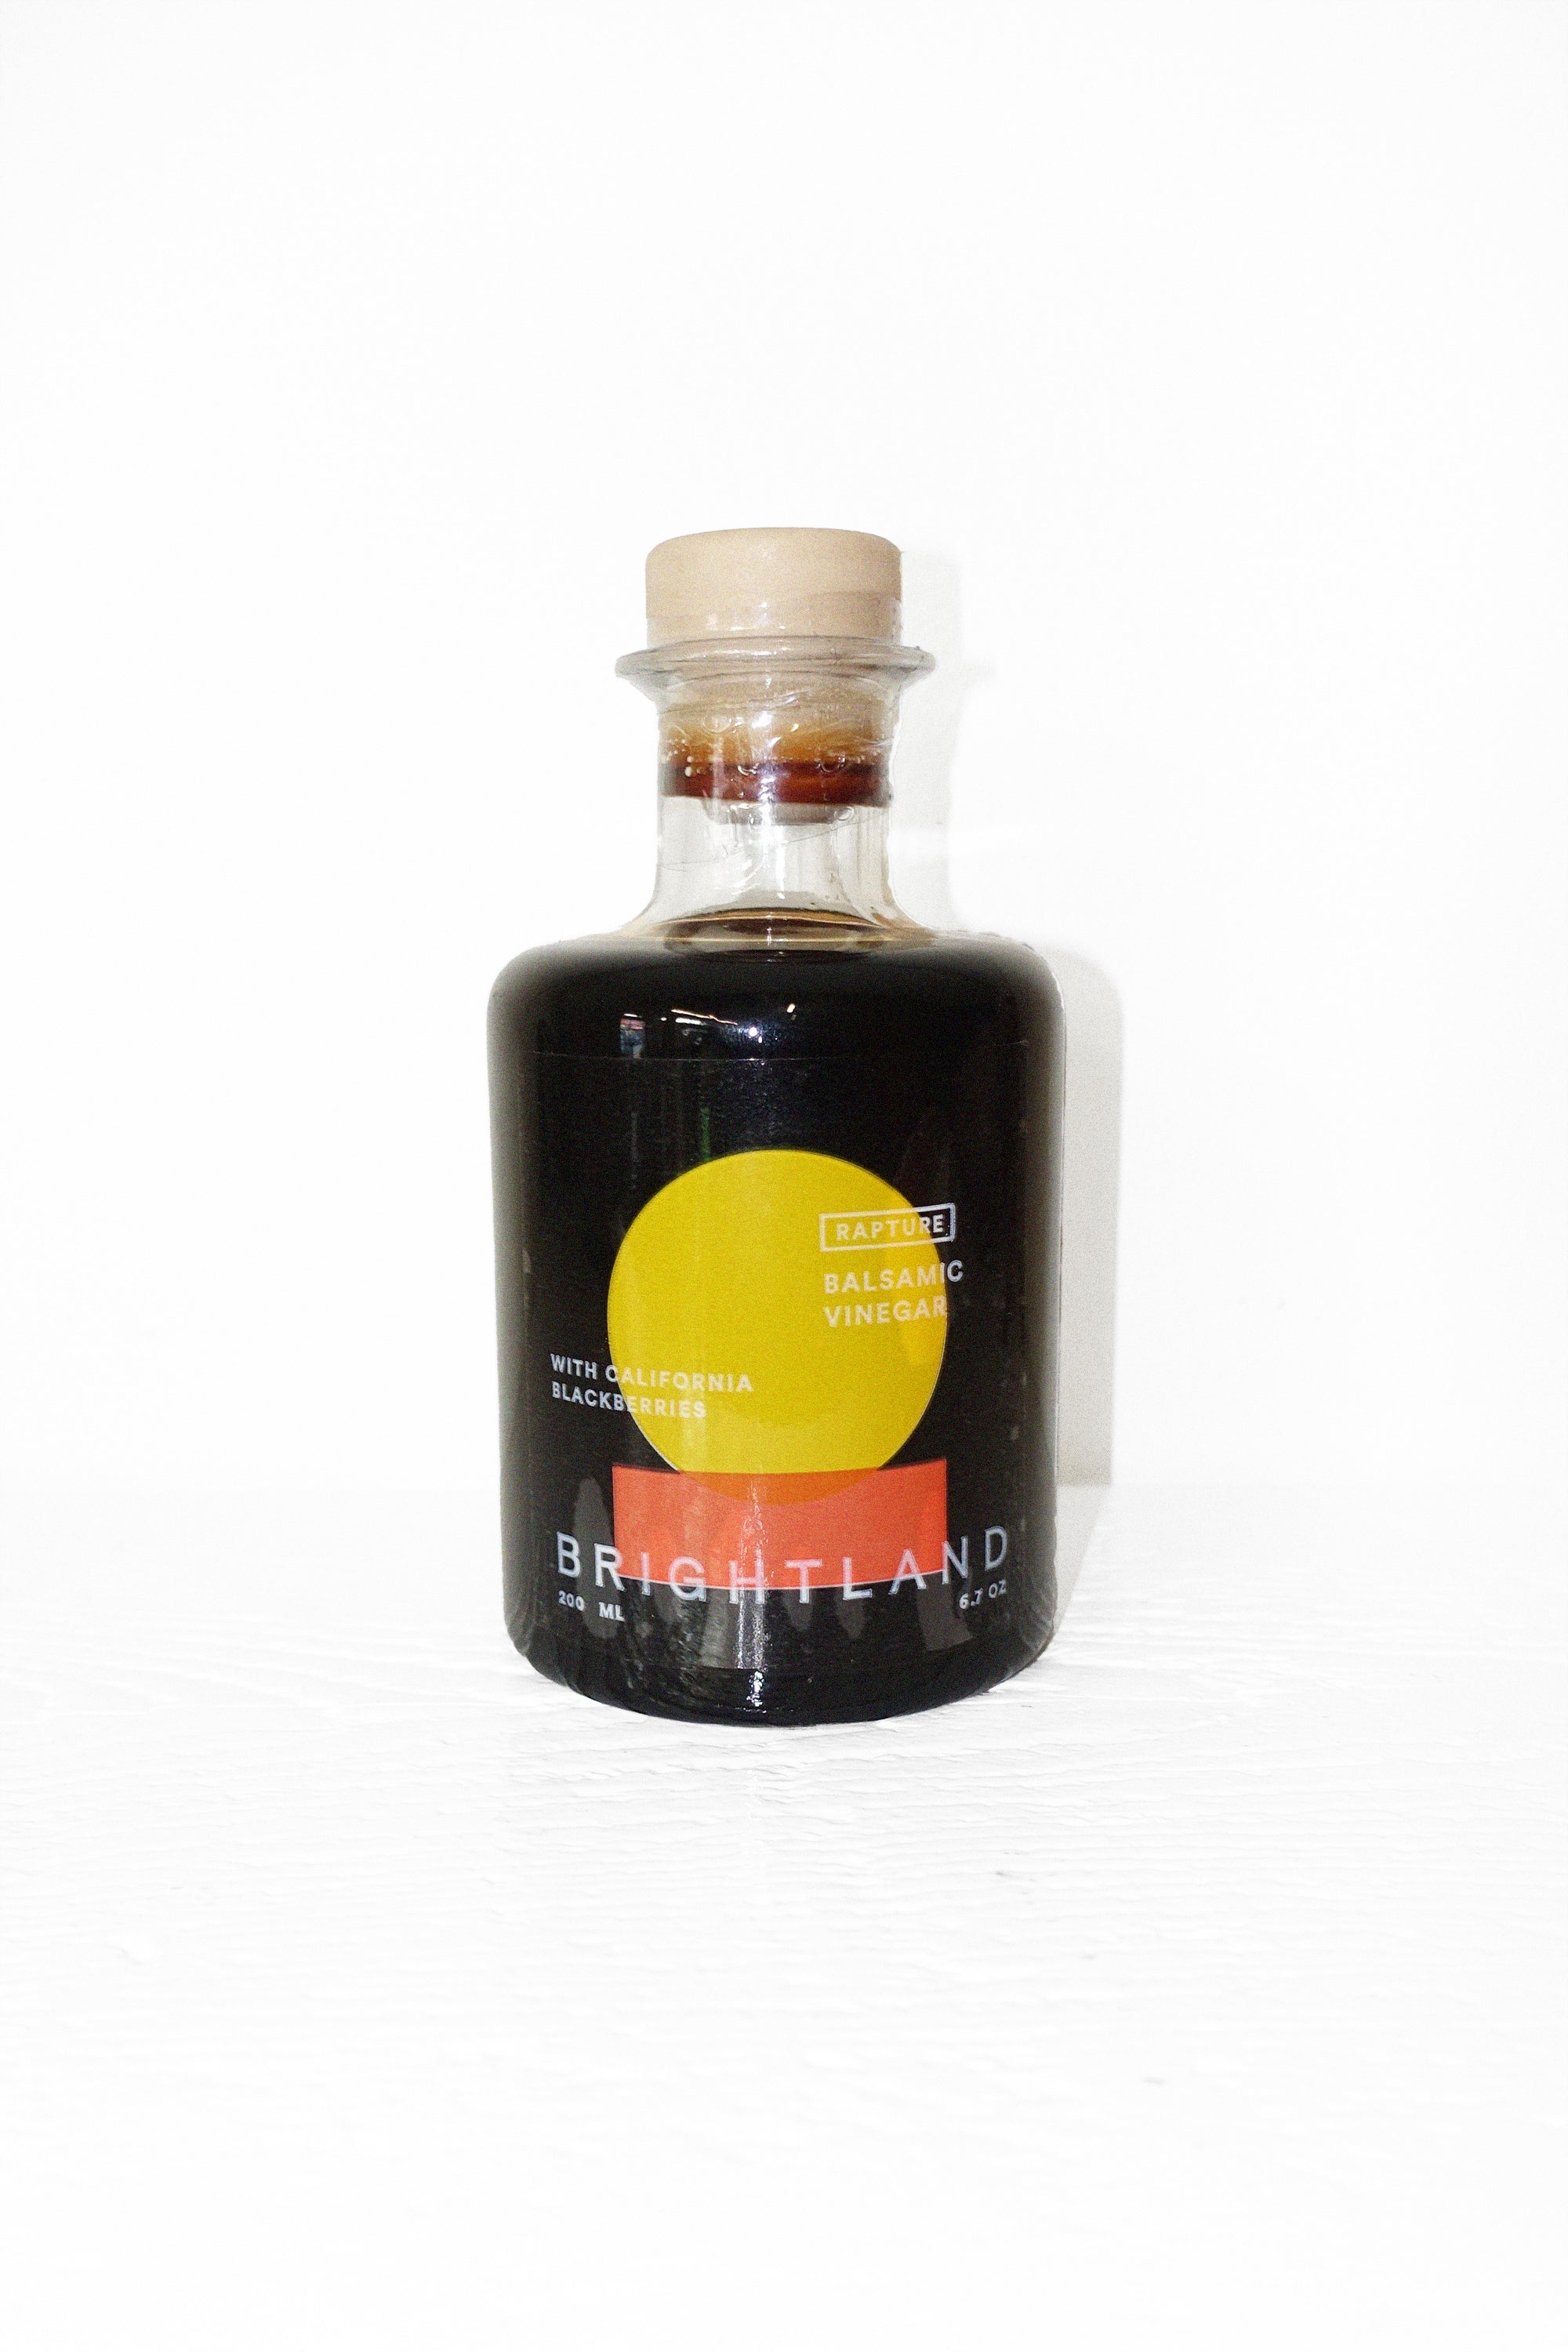 Rapture: Blackberry Balsamic Vinegar by Brightland